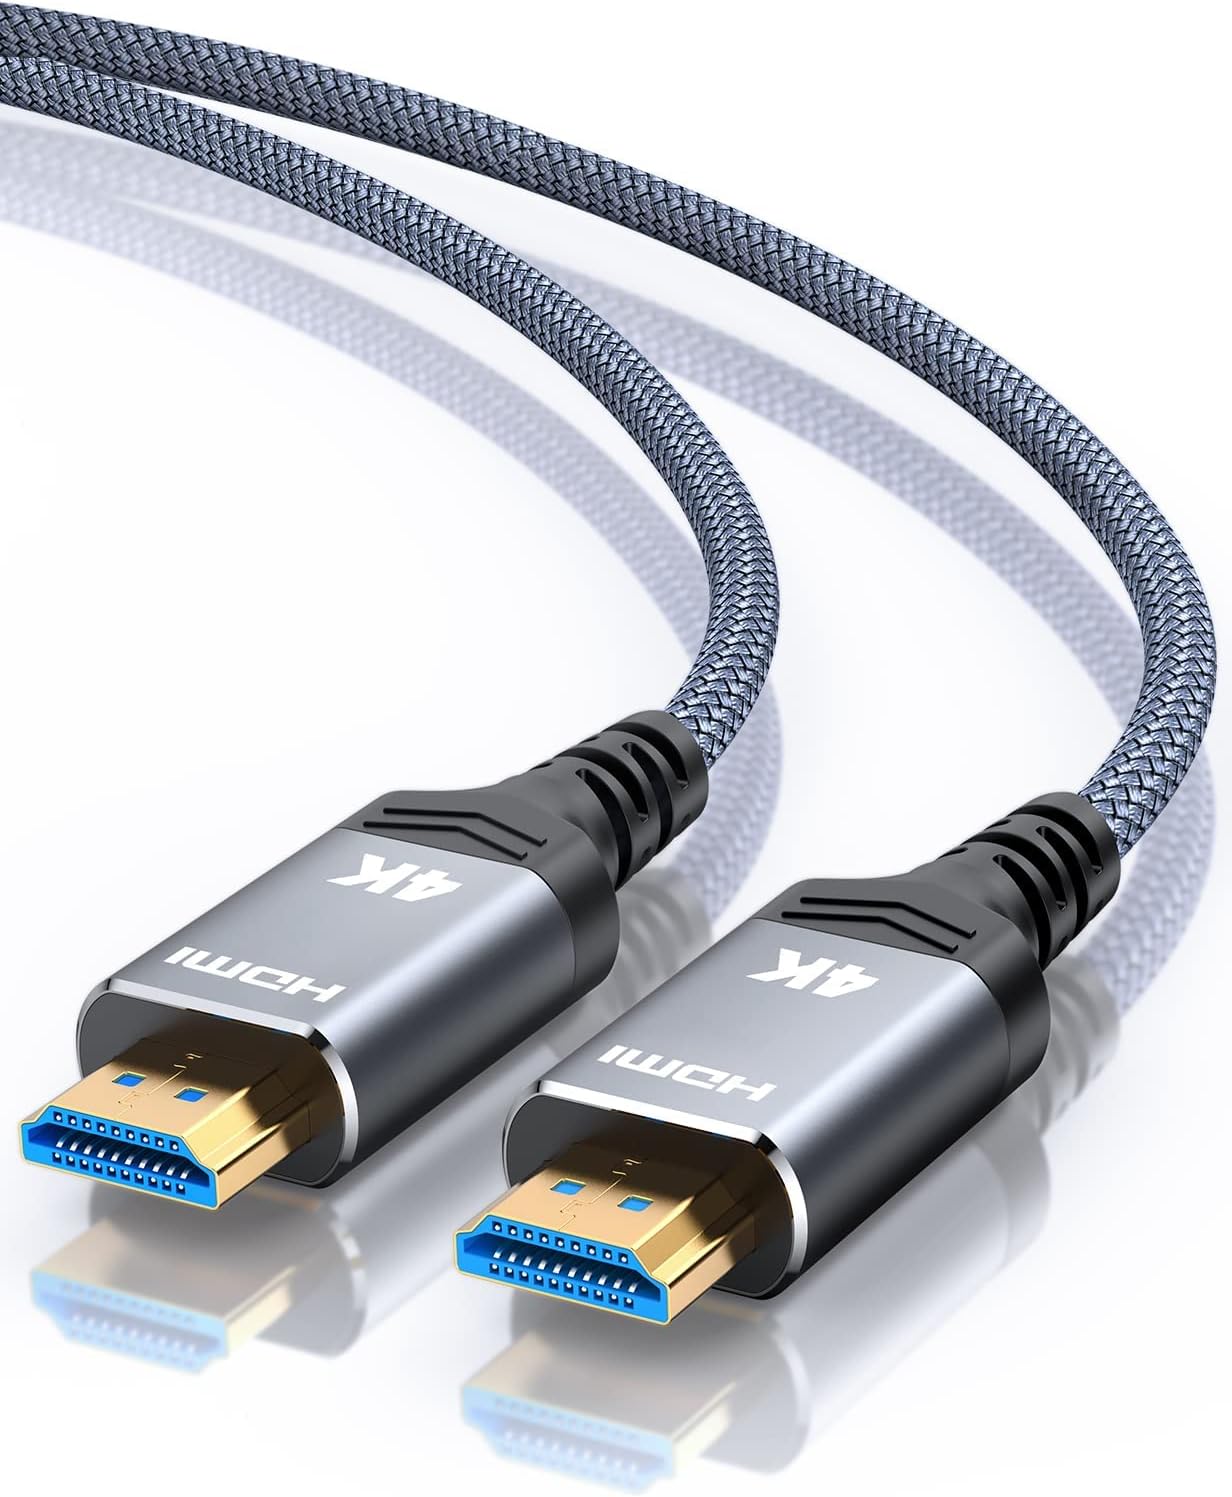 Highwings 4K Fiber Optic HDMI Cable 165FT Long, [...]